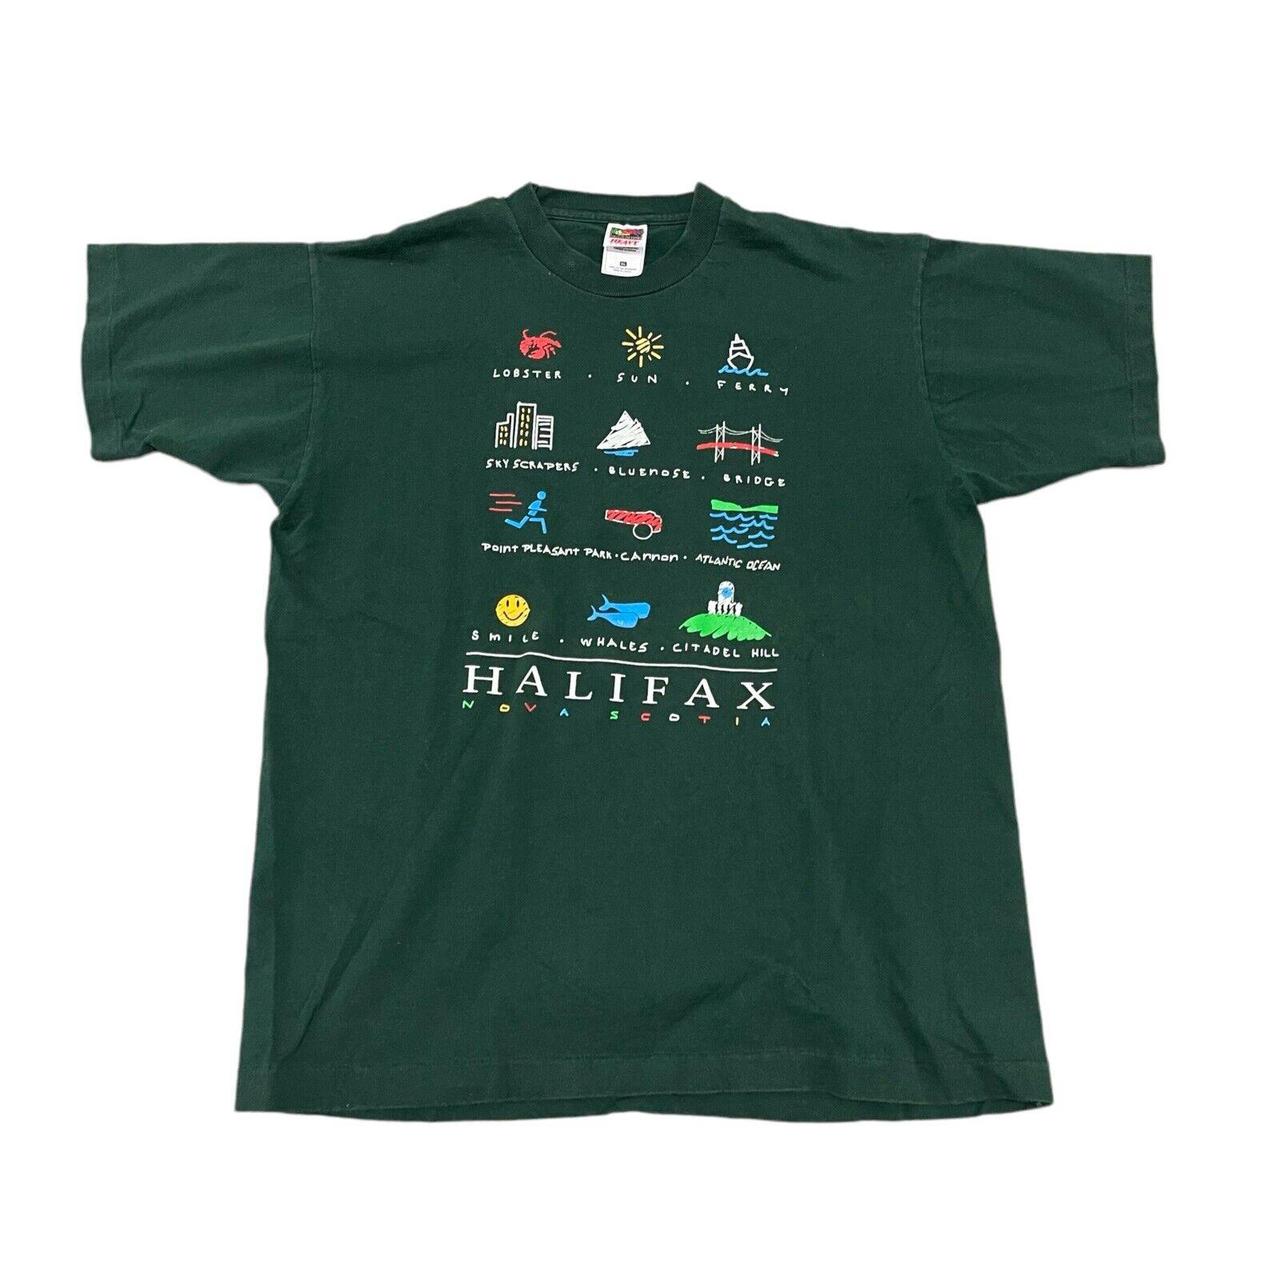 Halifax Men's T-shirt